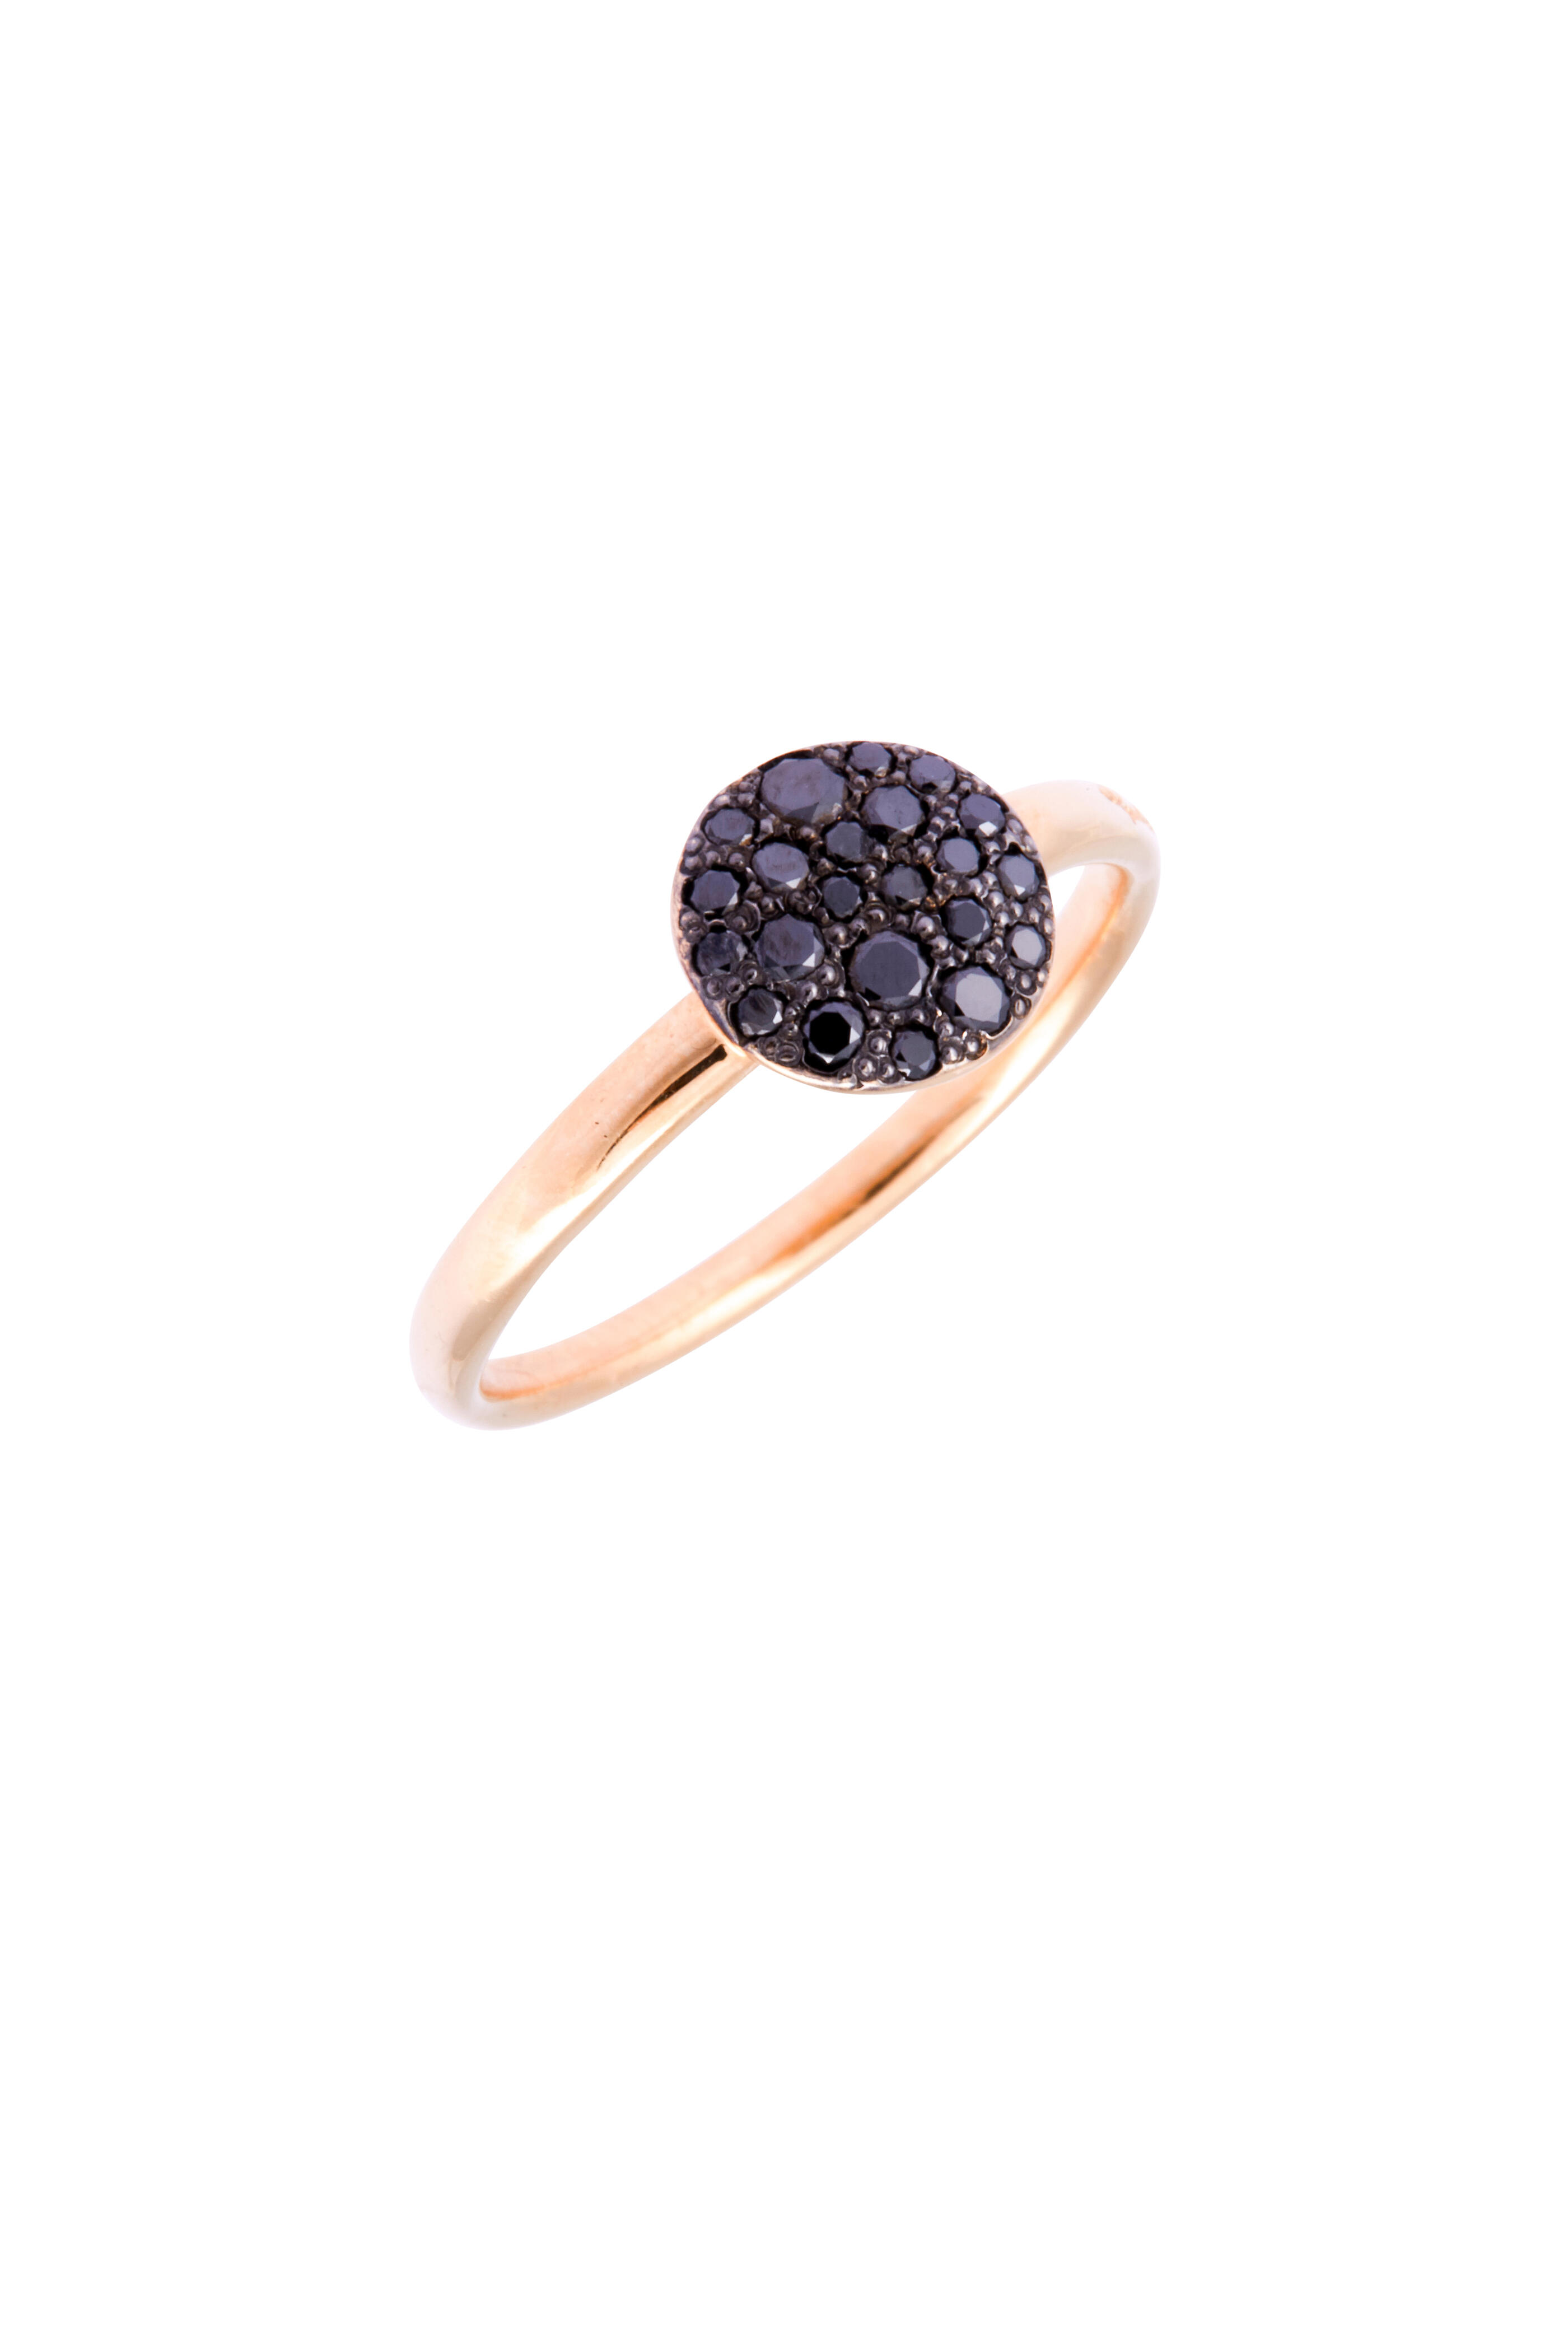 Pomellato 18kt Rose Gold Sabbia Black Diamond Ring